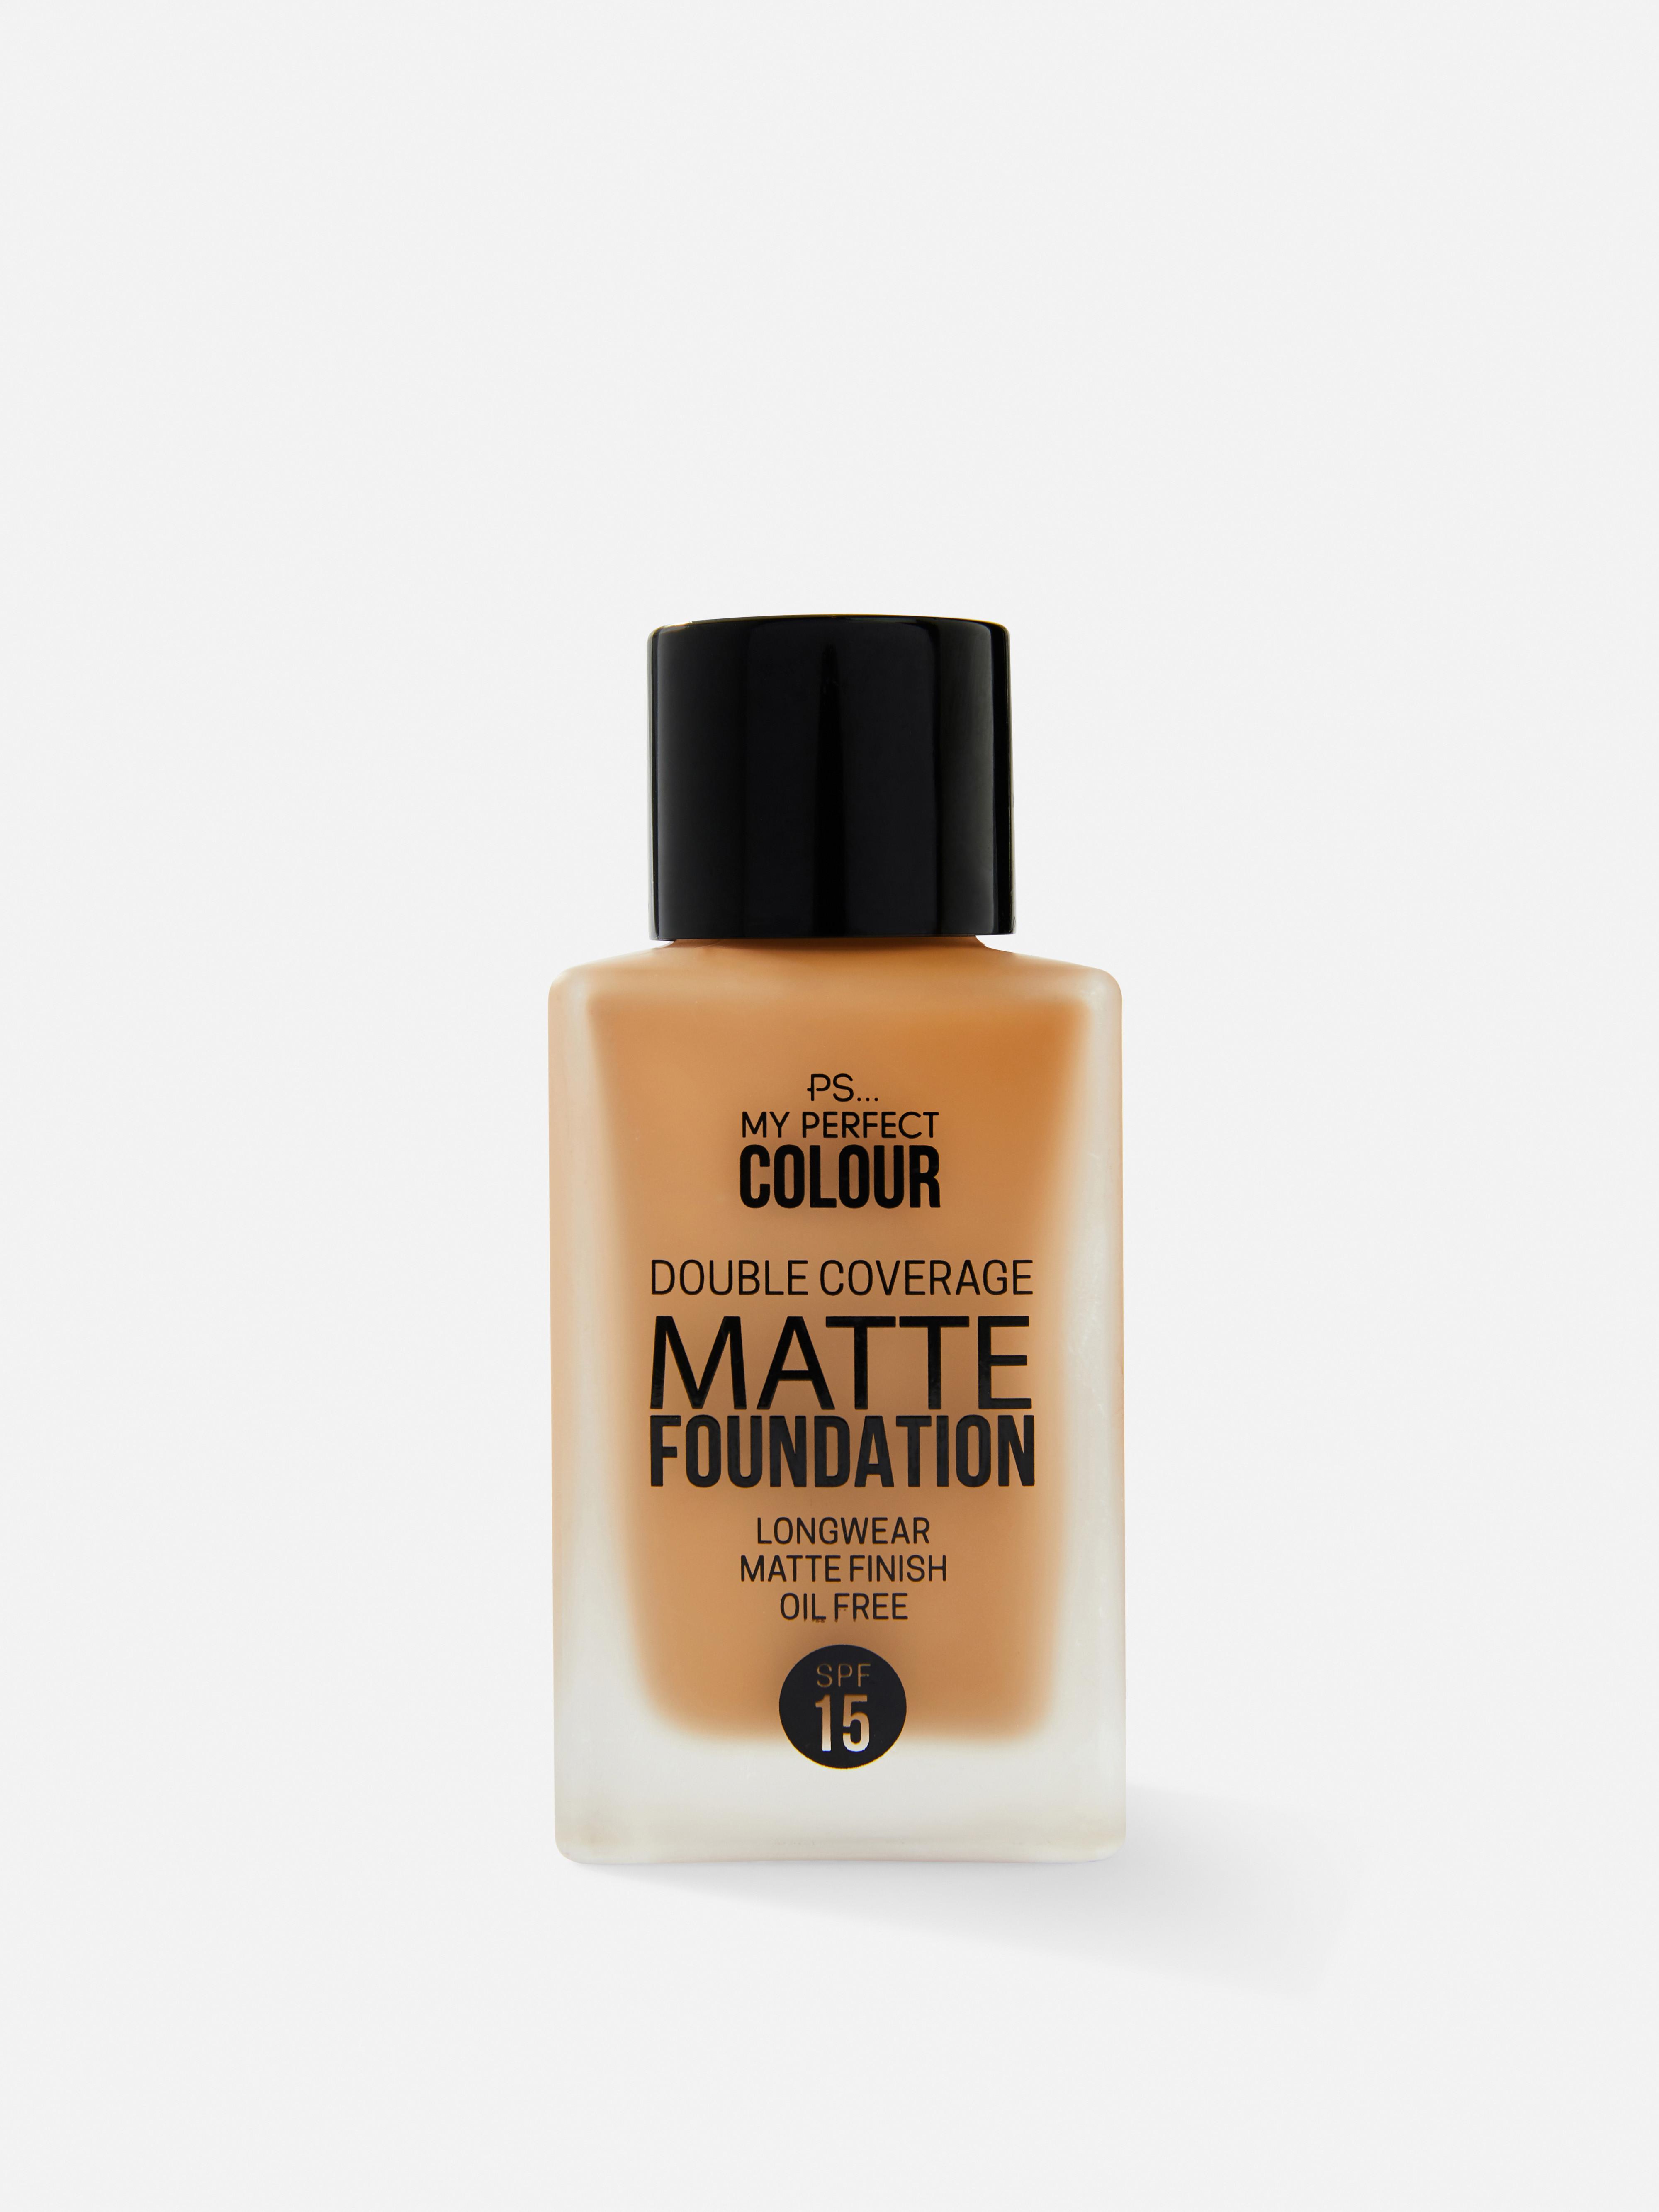 PS My Perfect Colour Matte Foundation